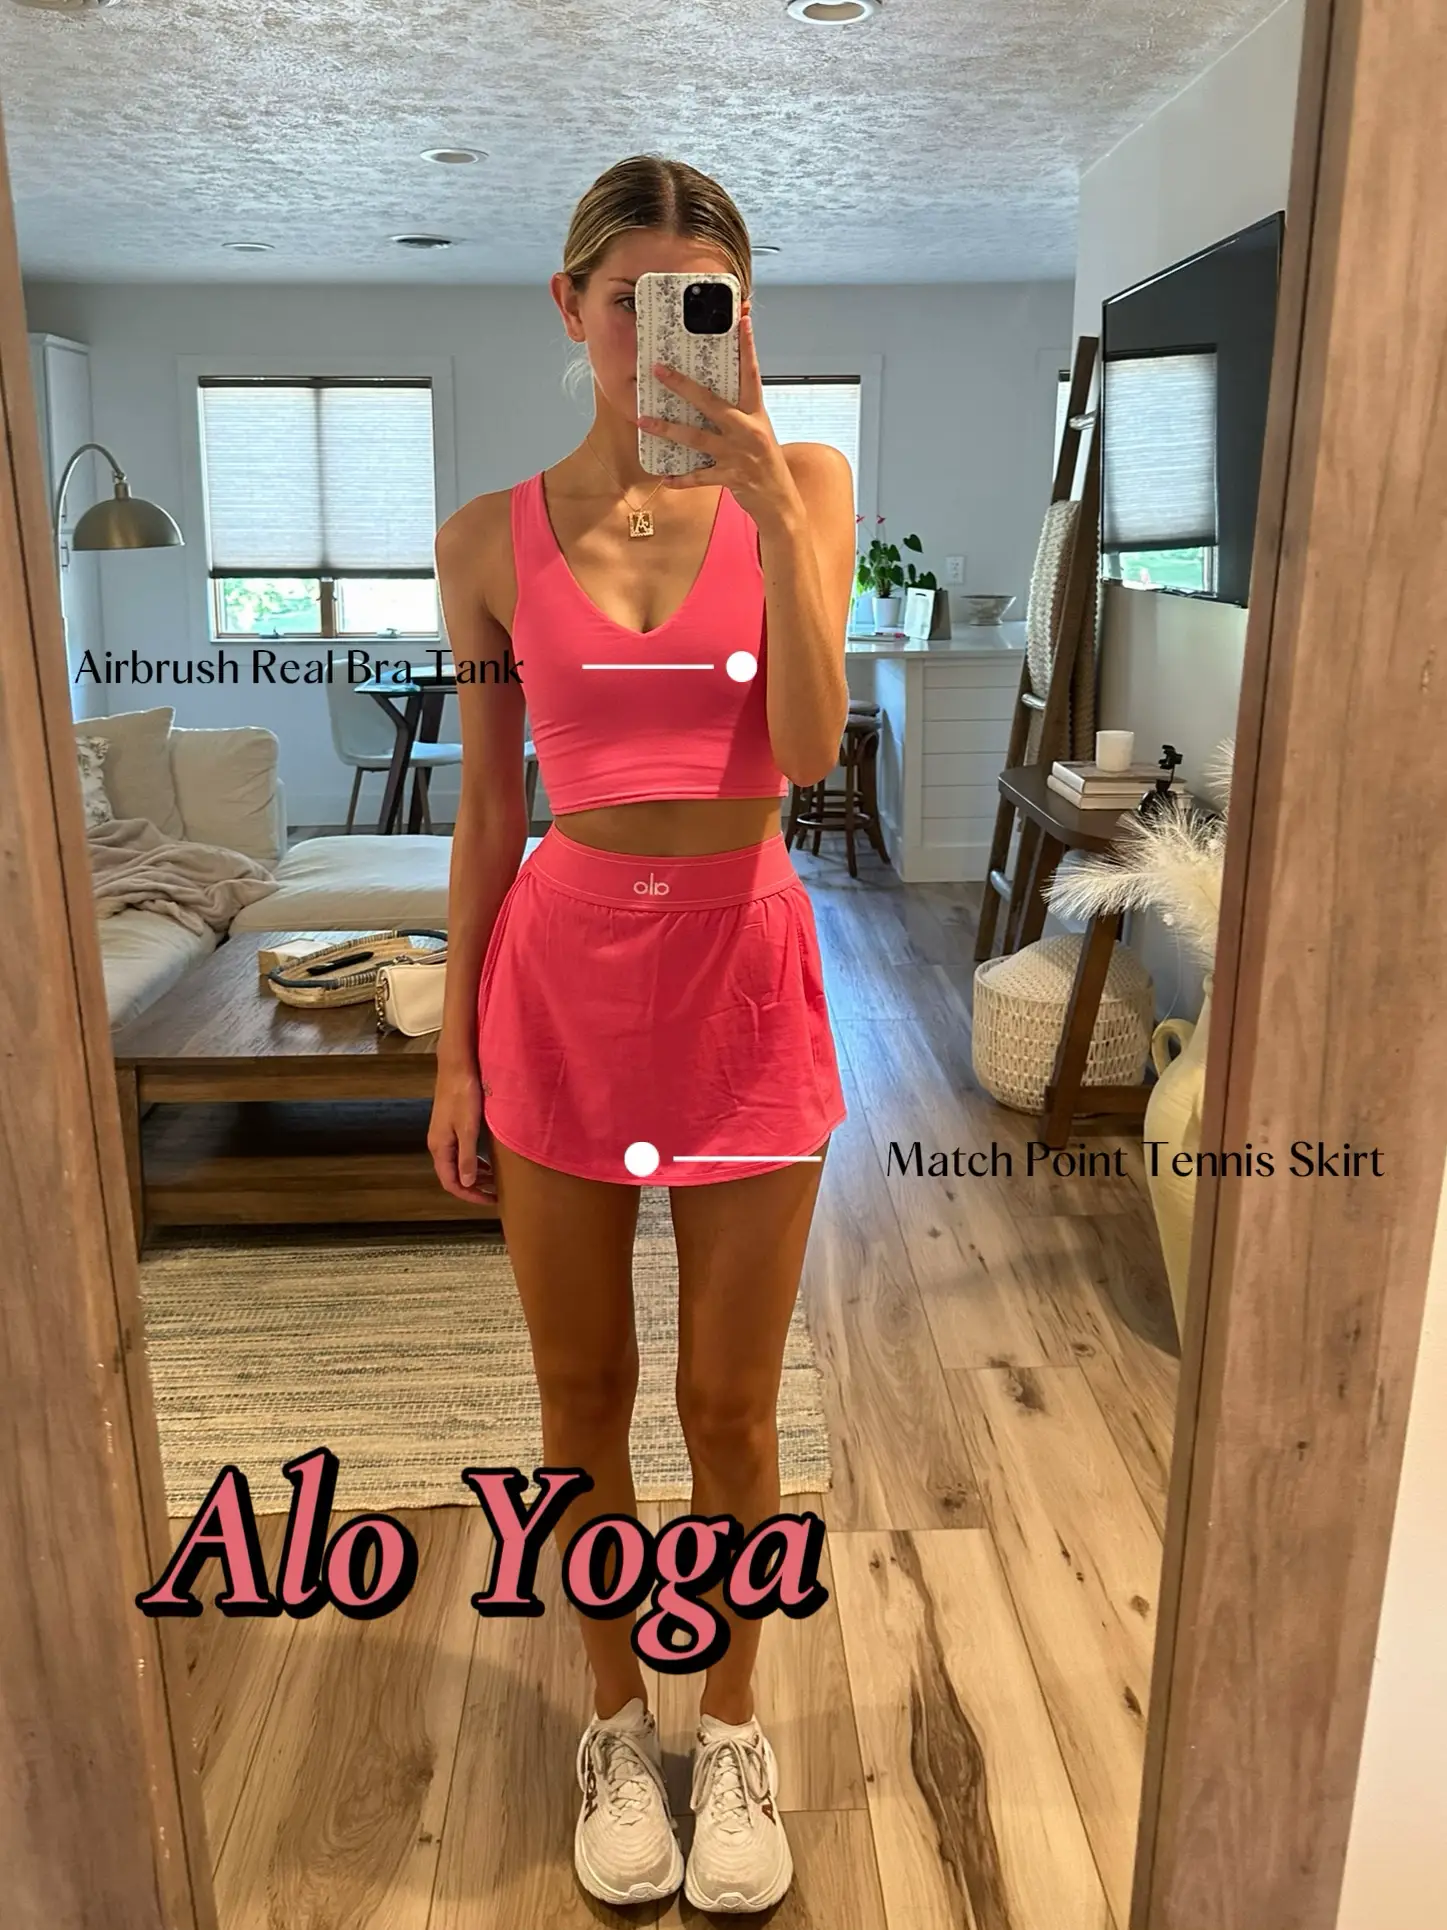 ALO YOGA Real Airbrush tennis dress